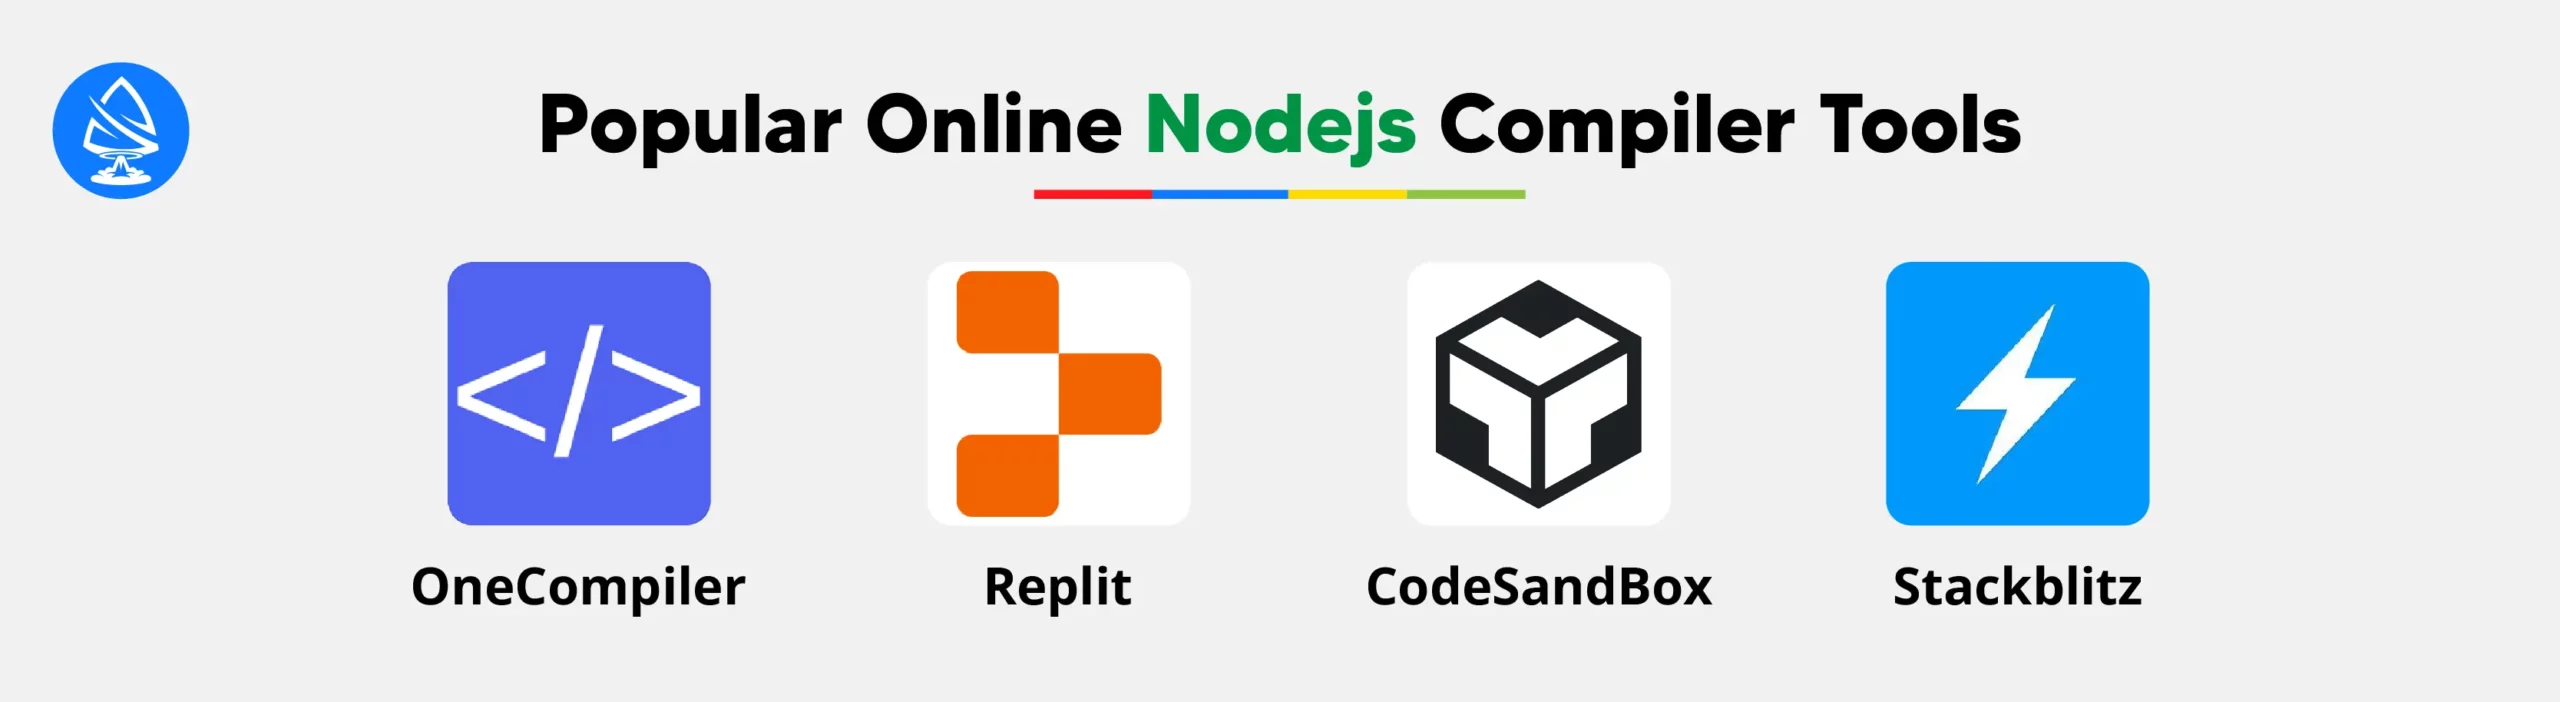 Popular Online Node js Compiler Tools 